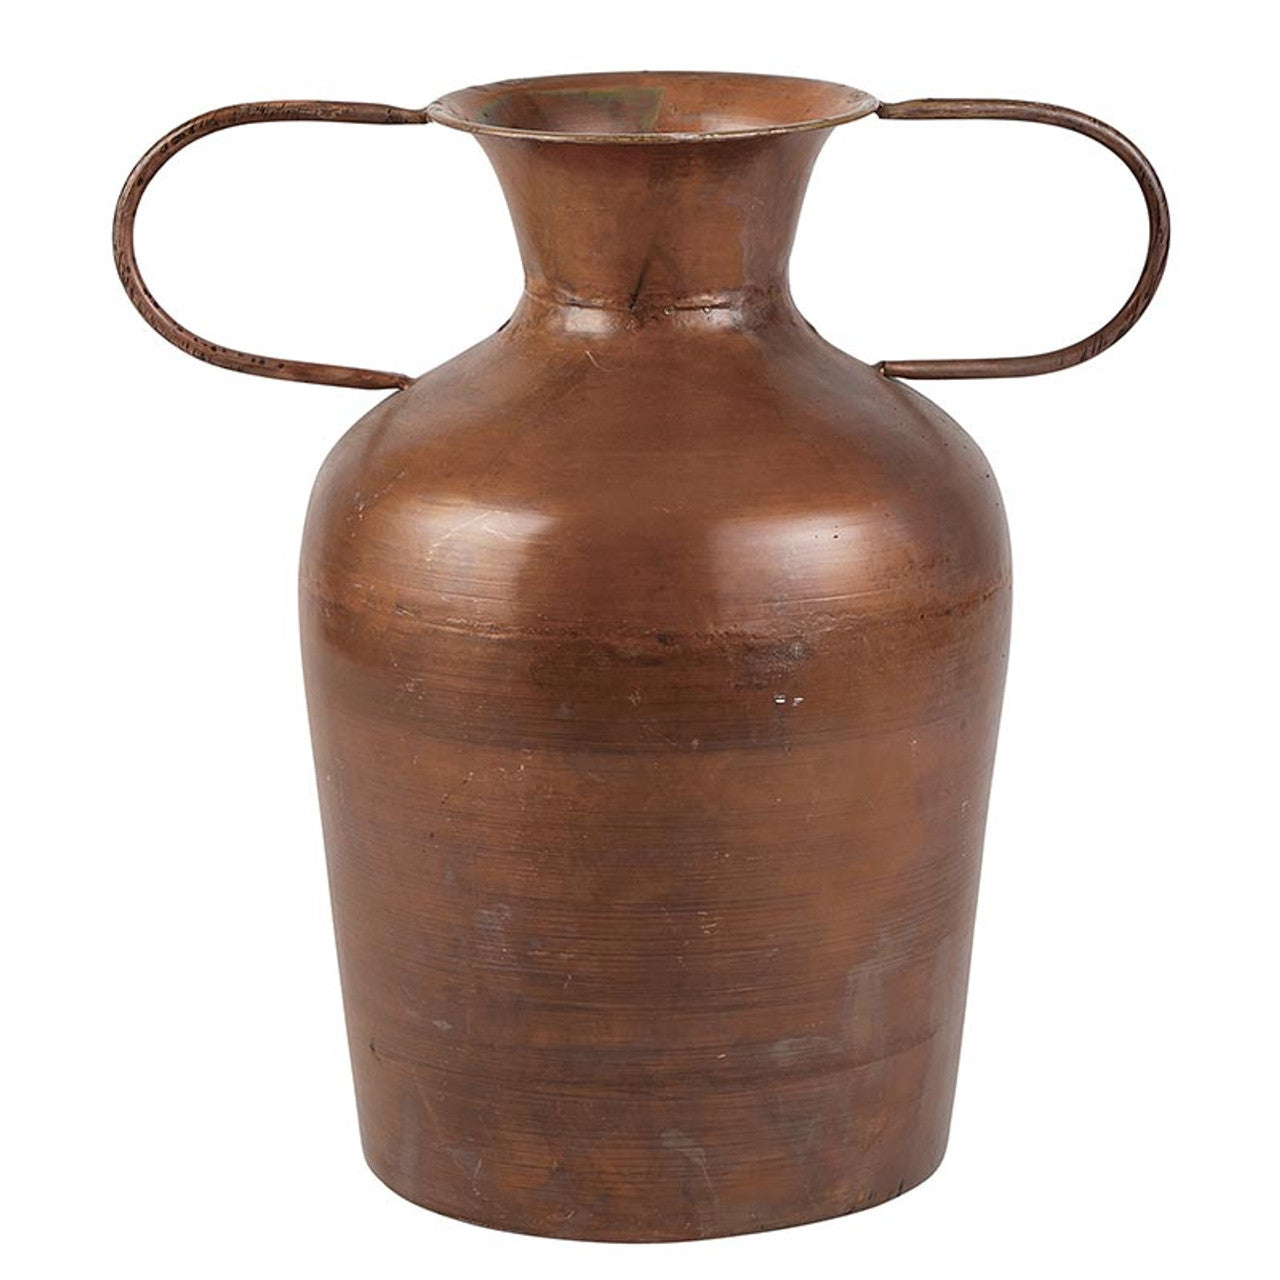 Copper Metal Vase with Handles